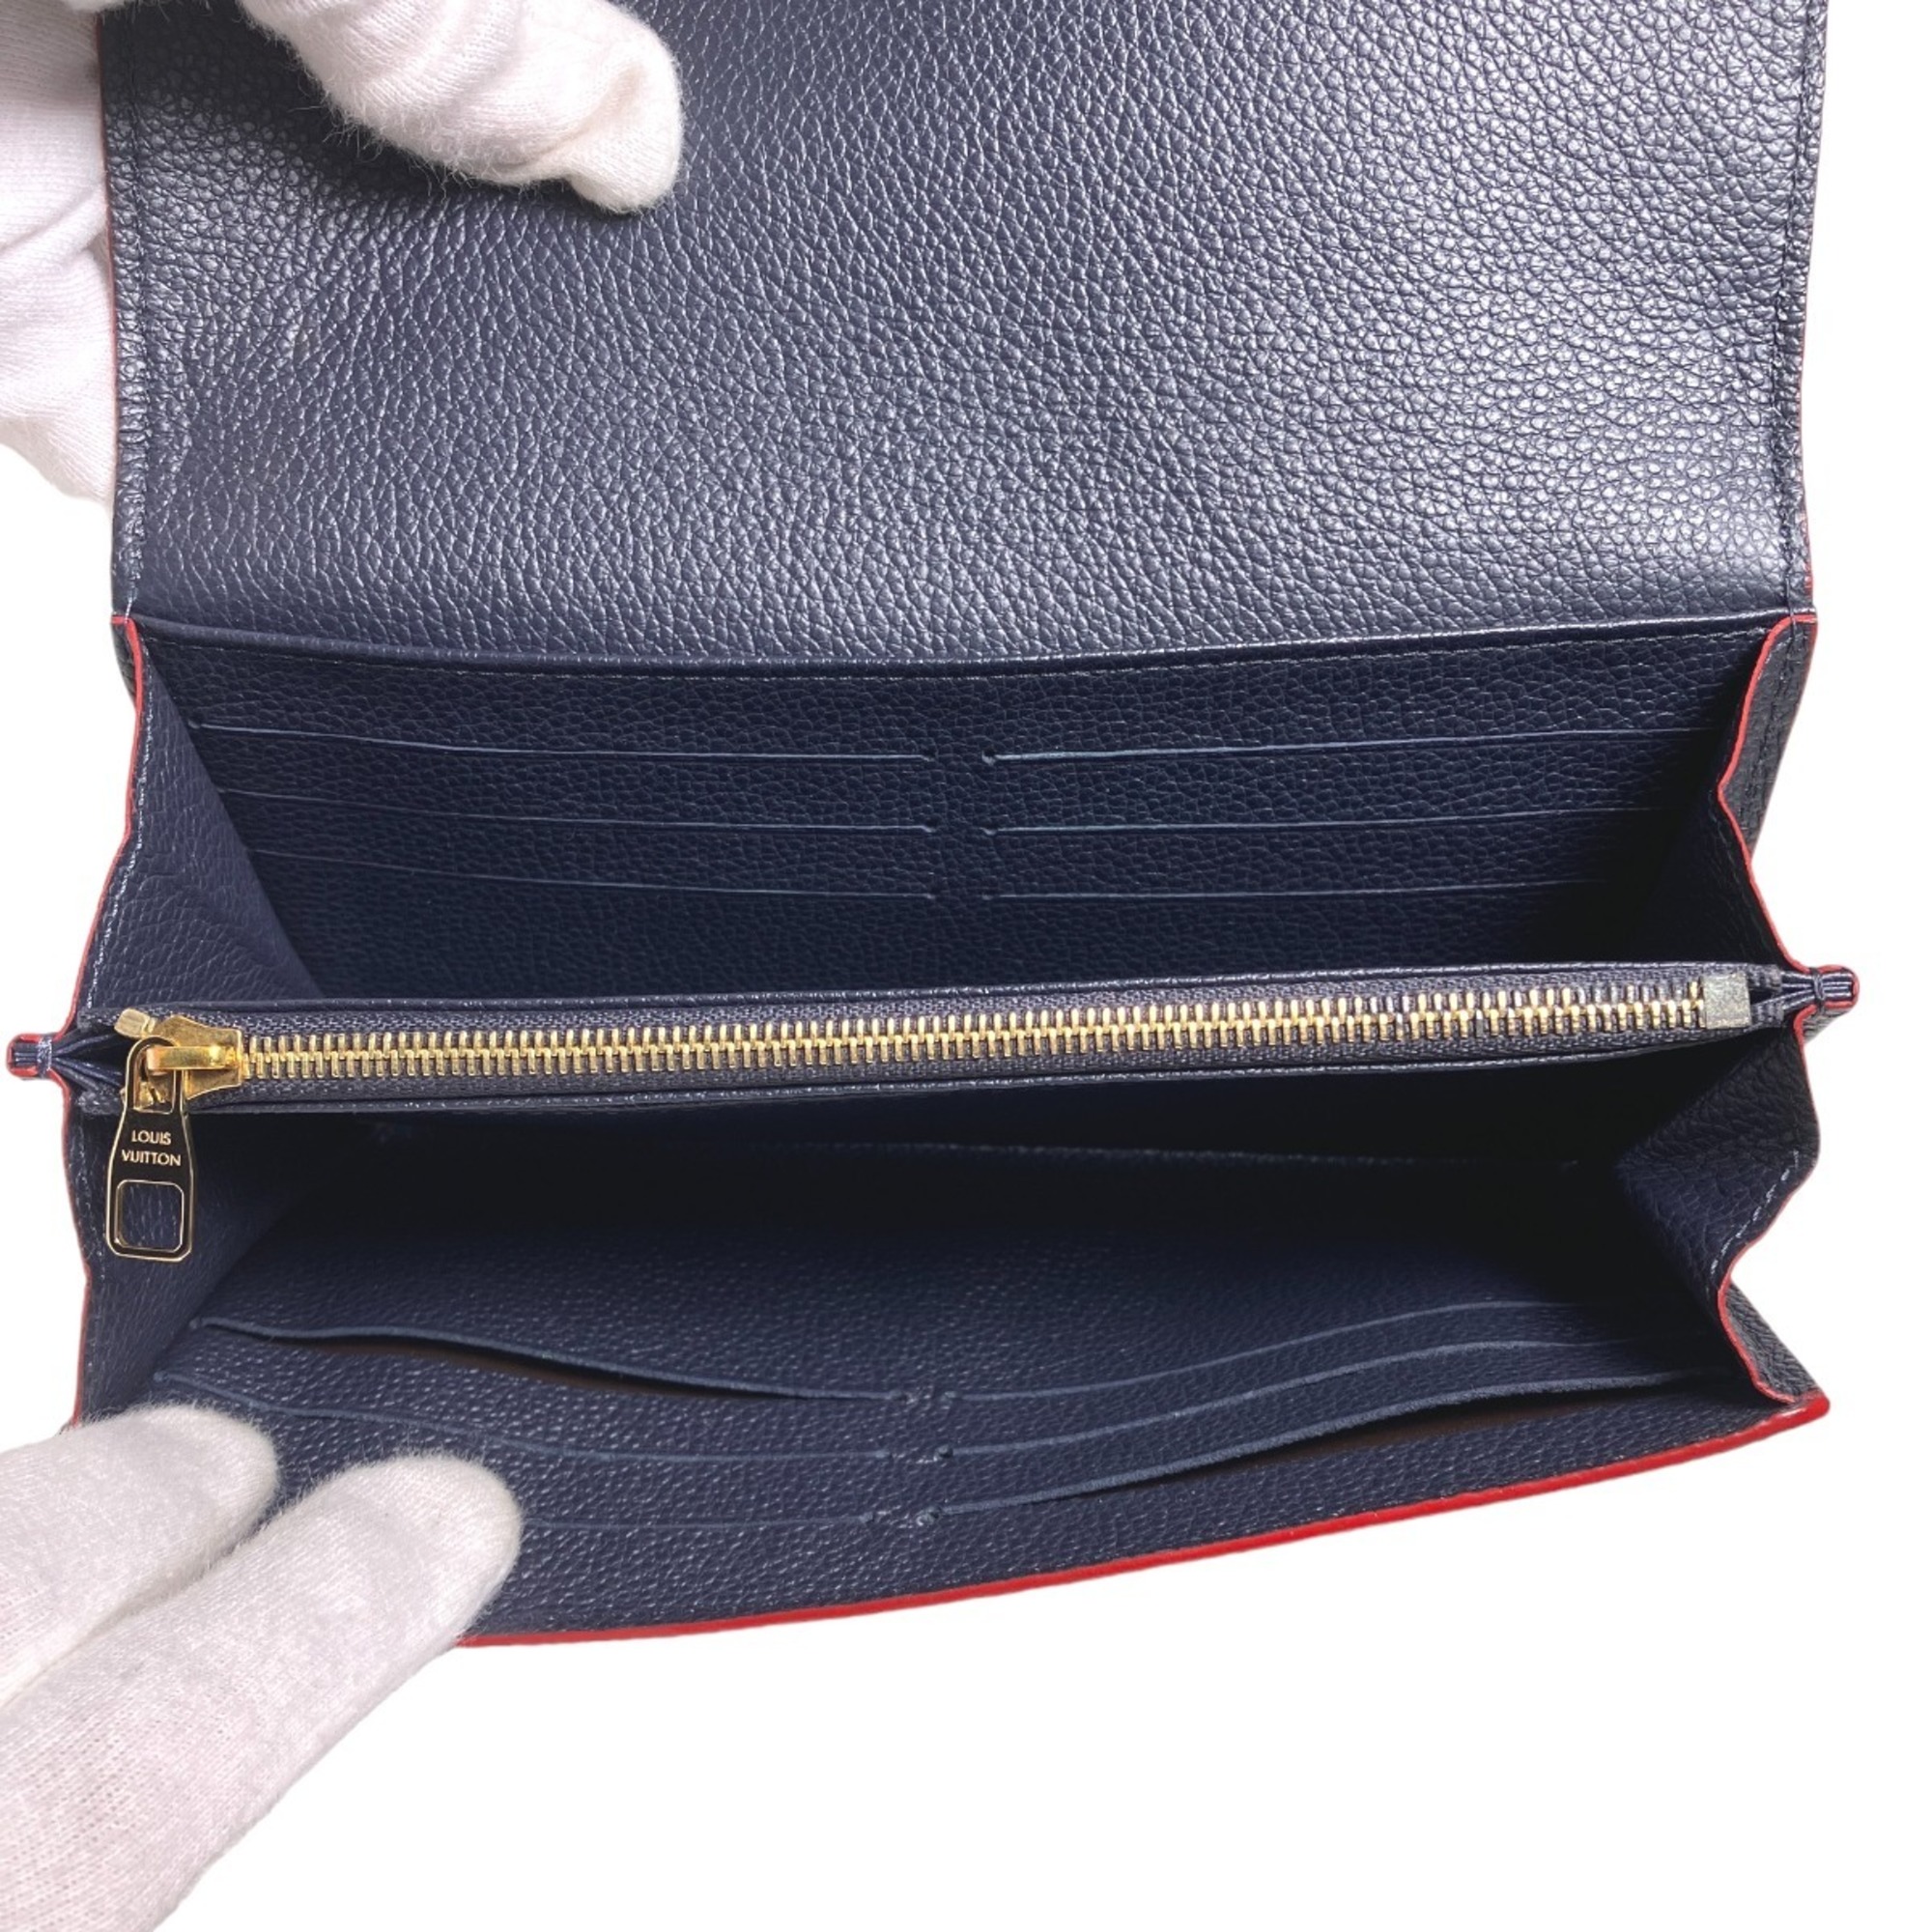 Louis Vuitton Portefeuille Sarah Empreinte Coin Purse with Card Case M62125 Marine Rouge Long Wallet